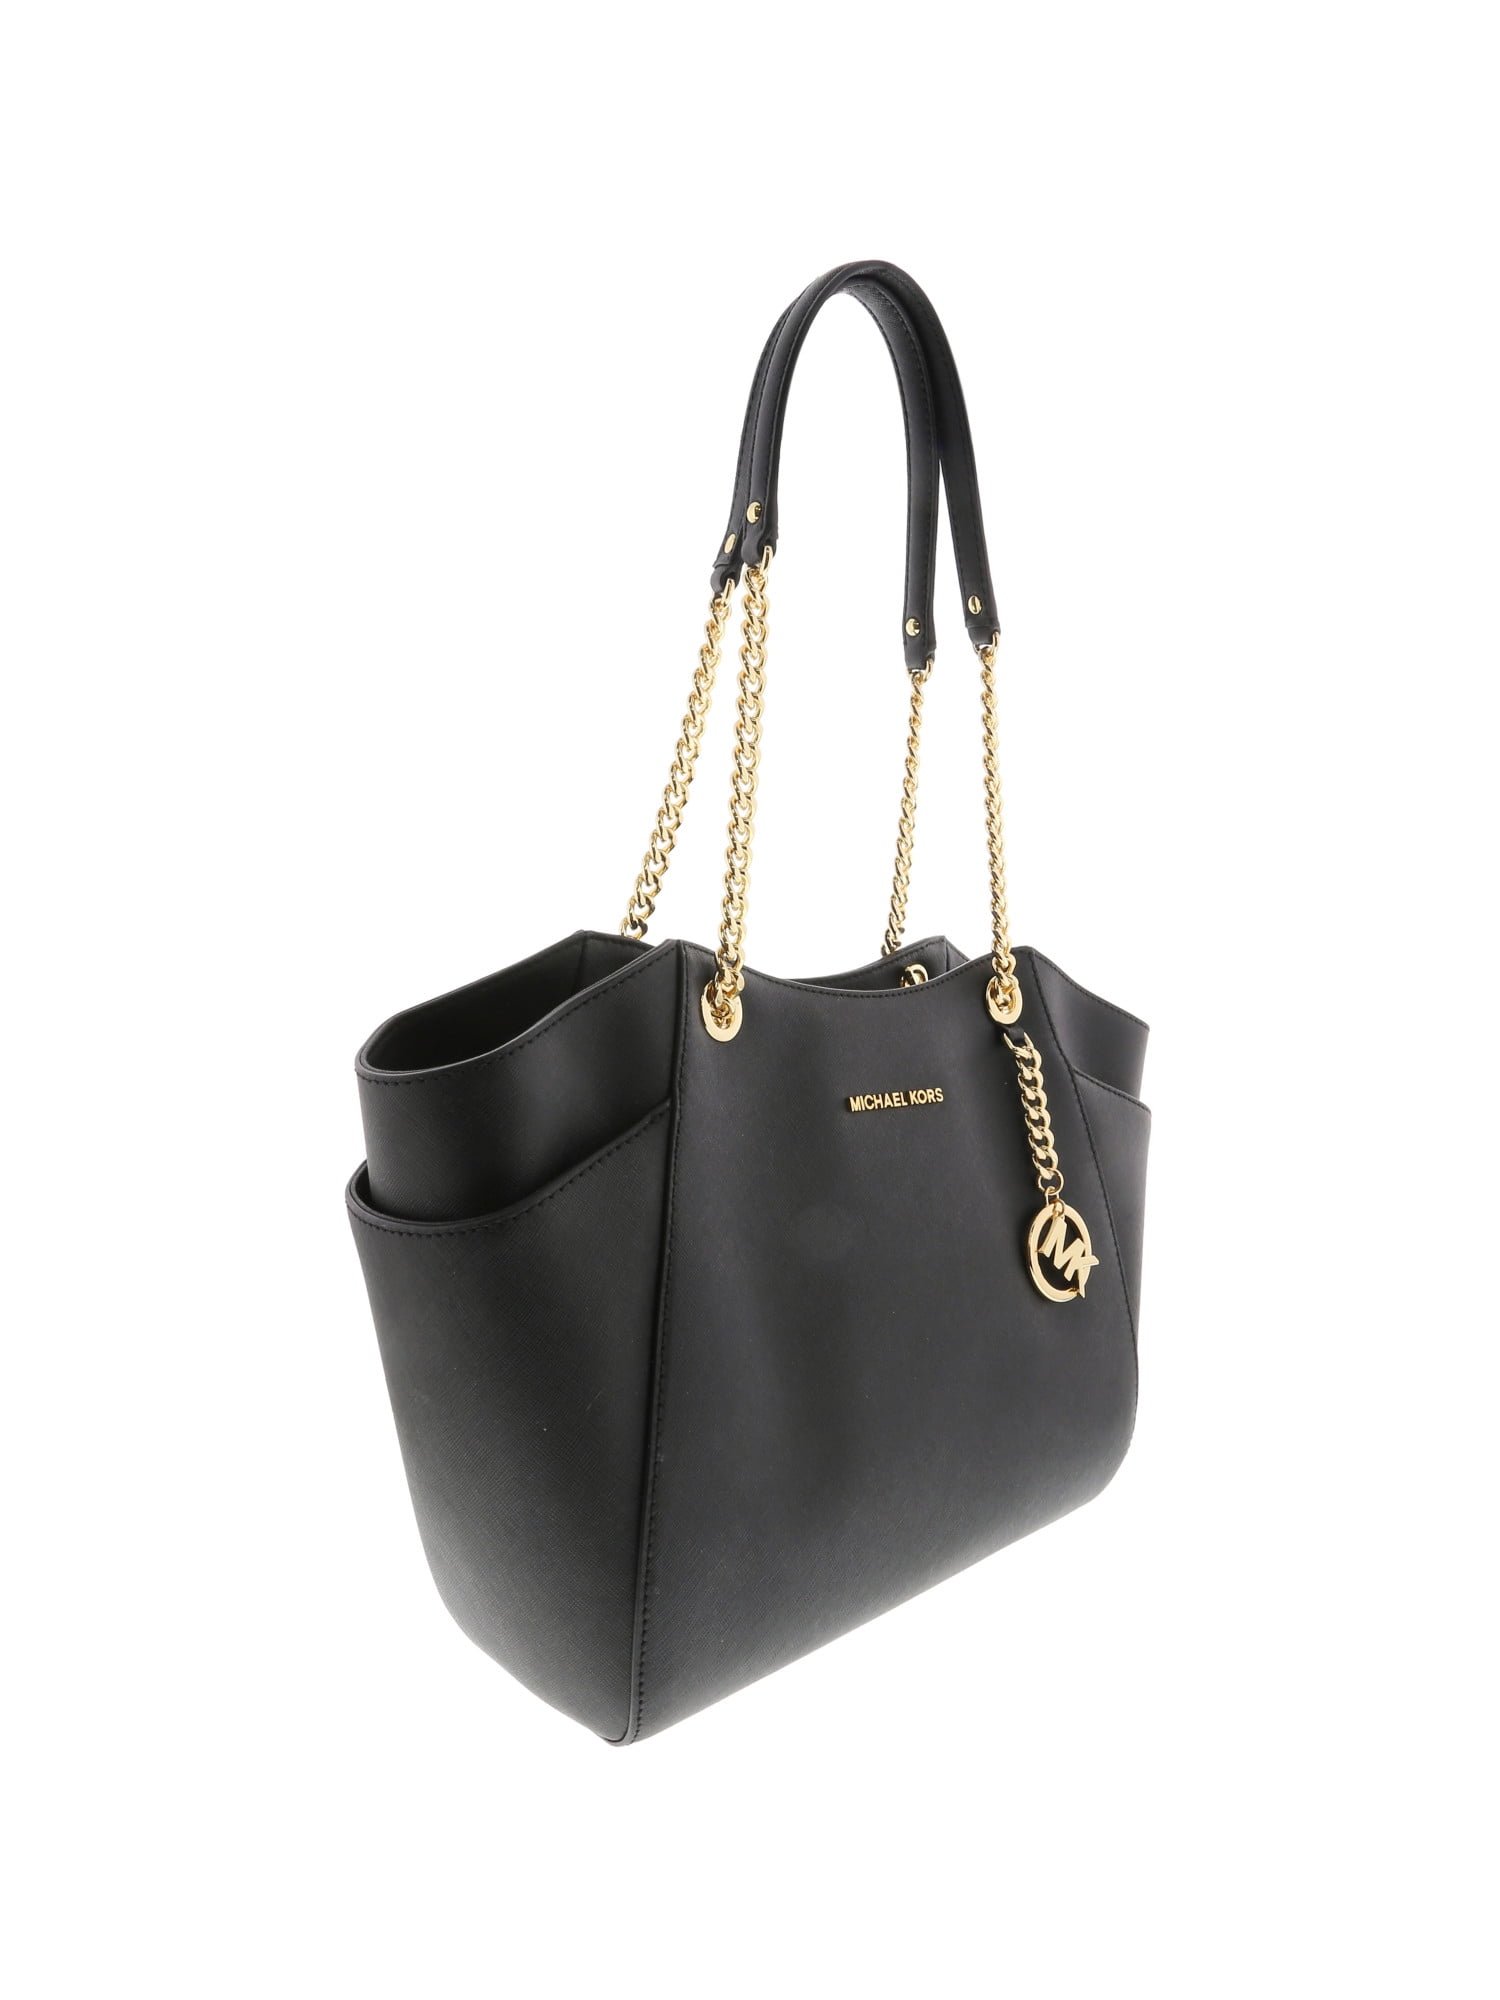 michael kors handbags with chain